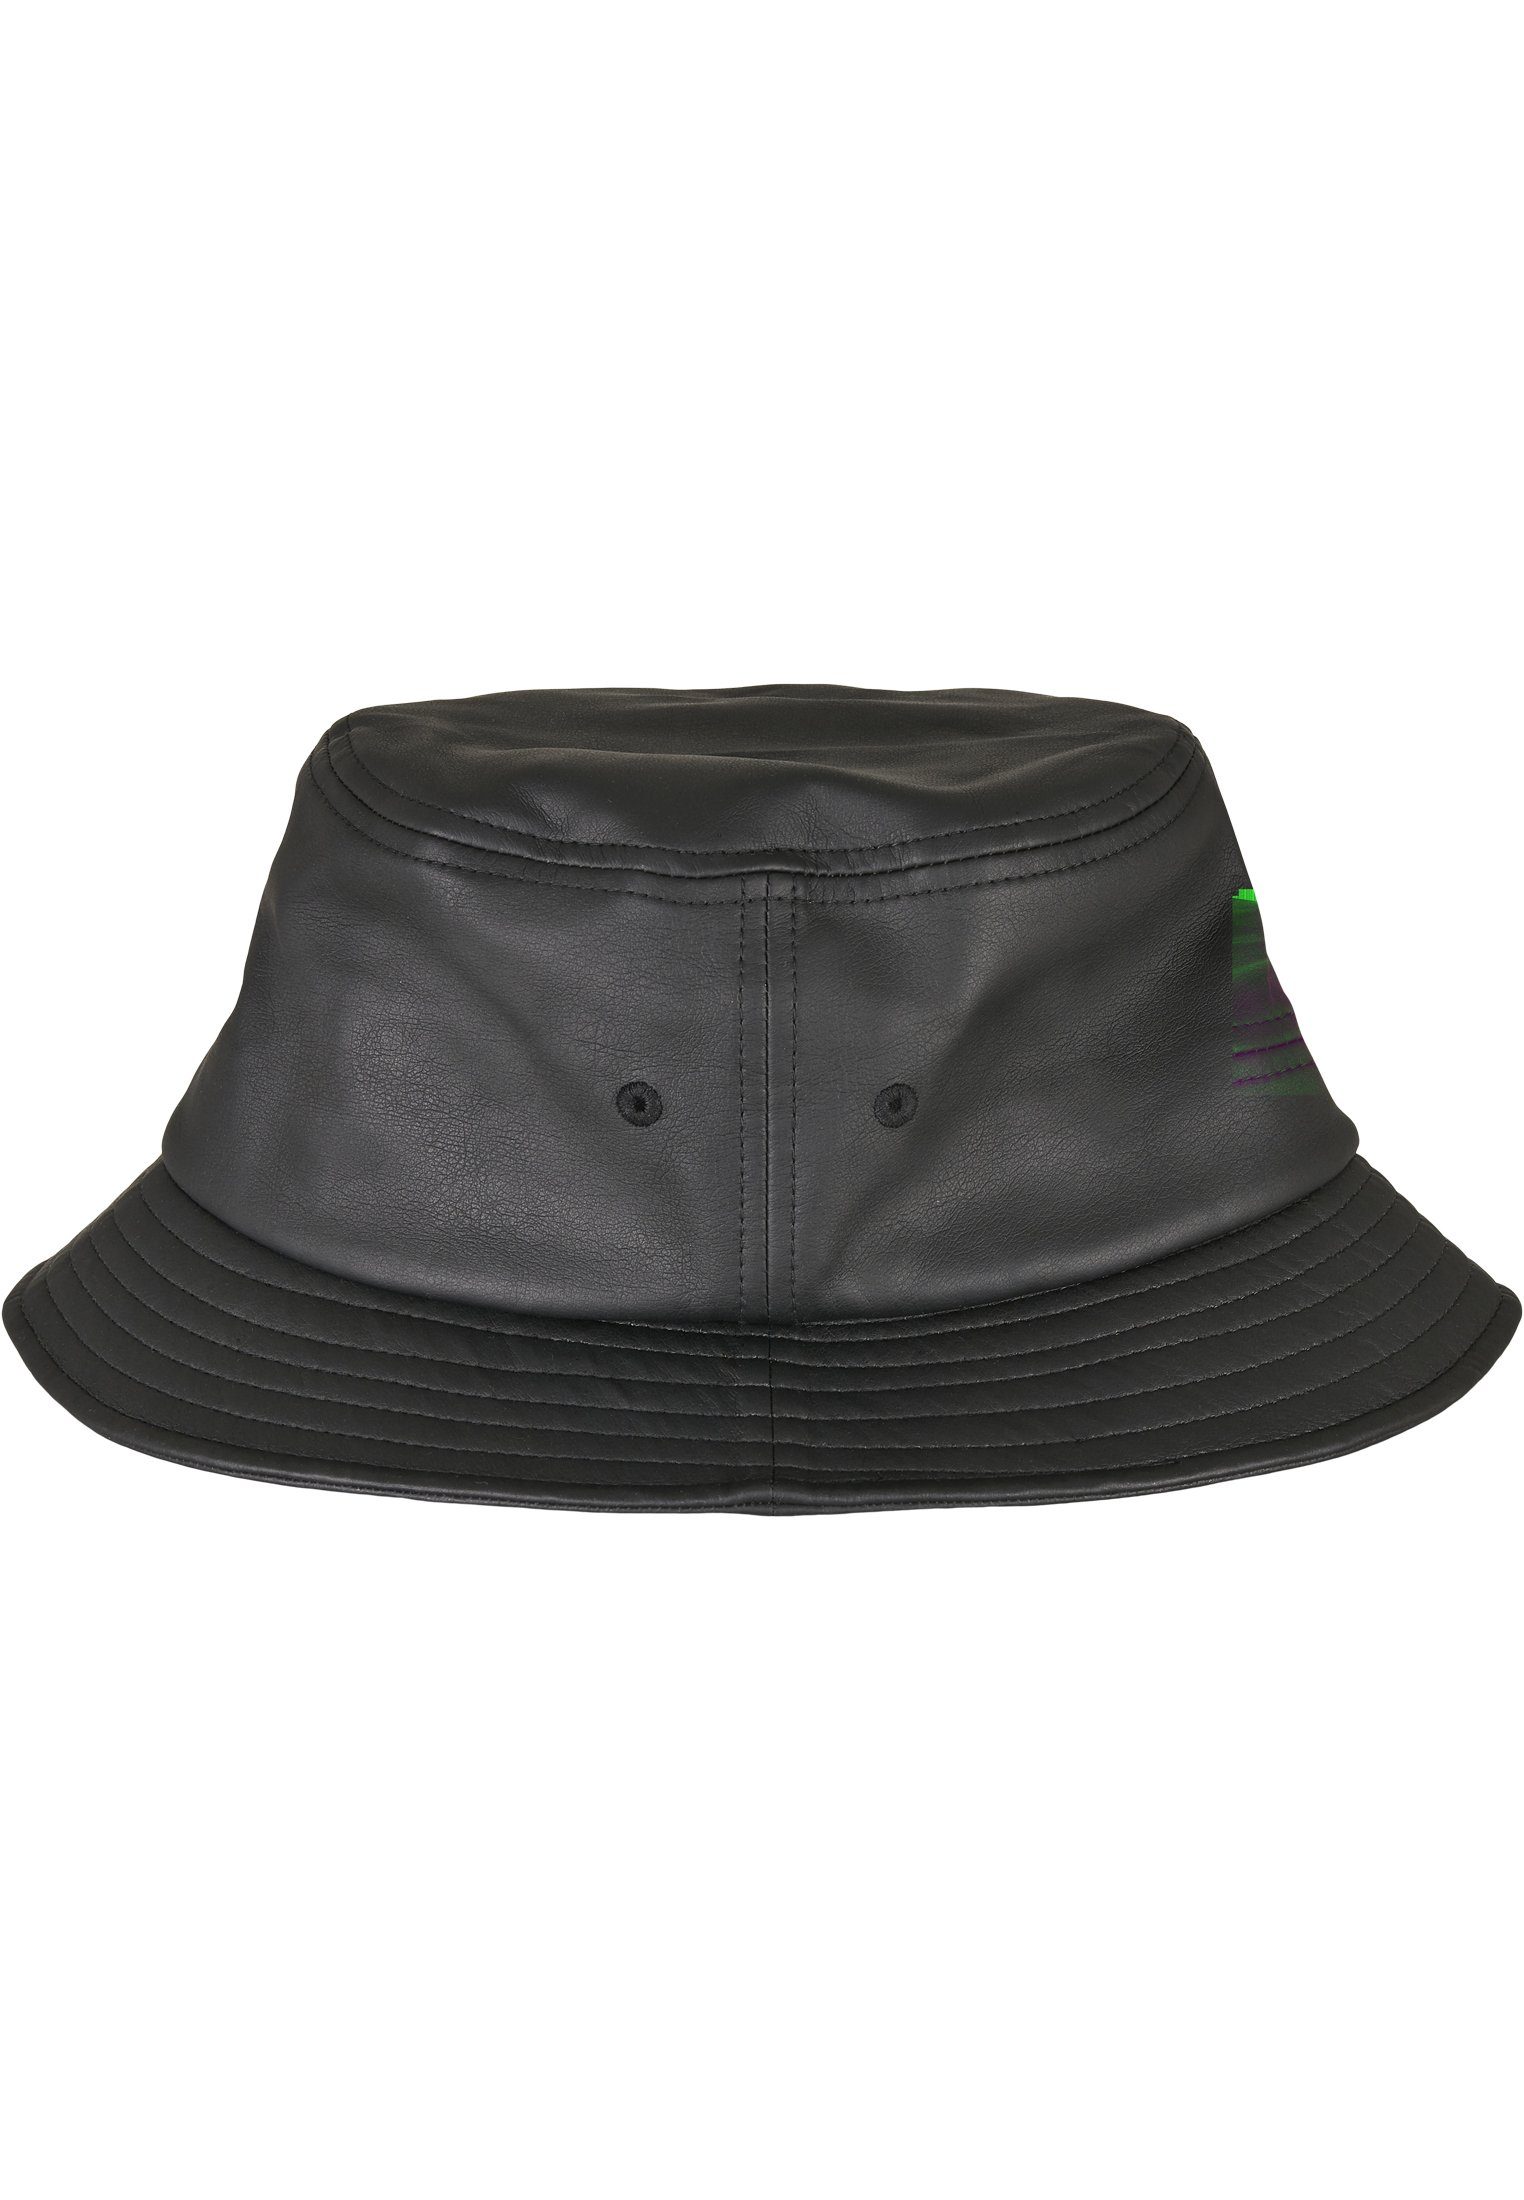 Leather Hat Hat Cap Bucket Flex Flexfit Bucket Imitation